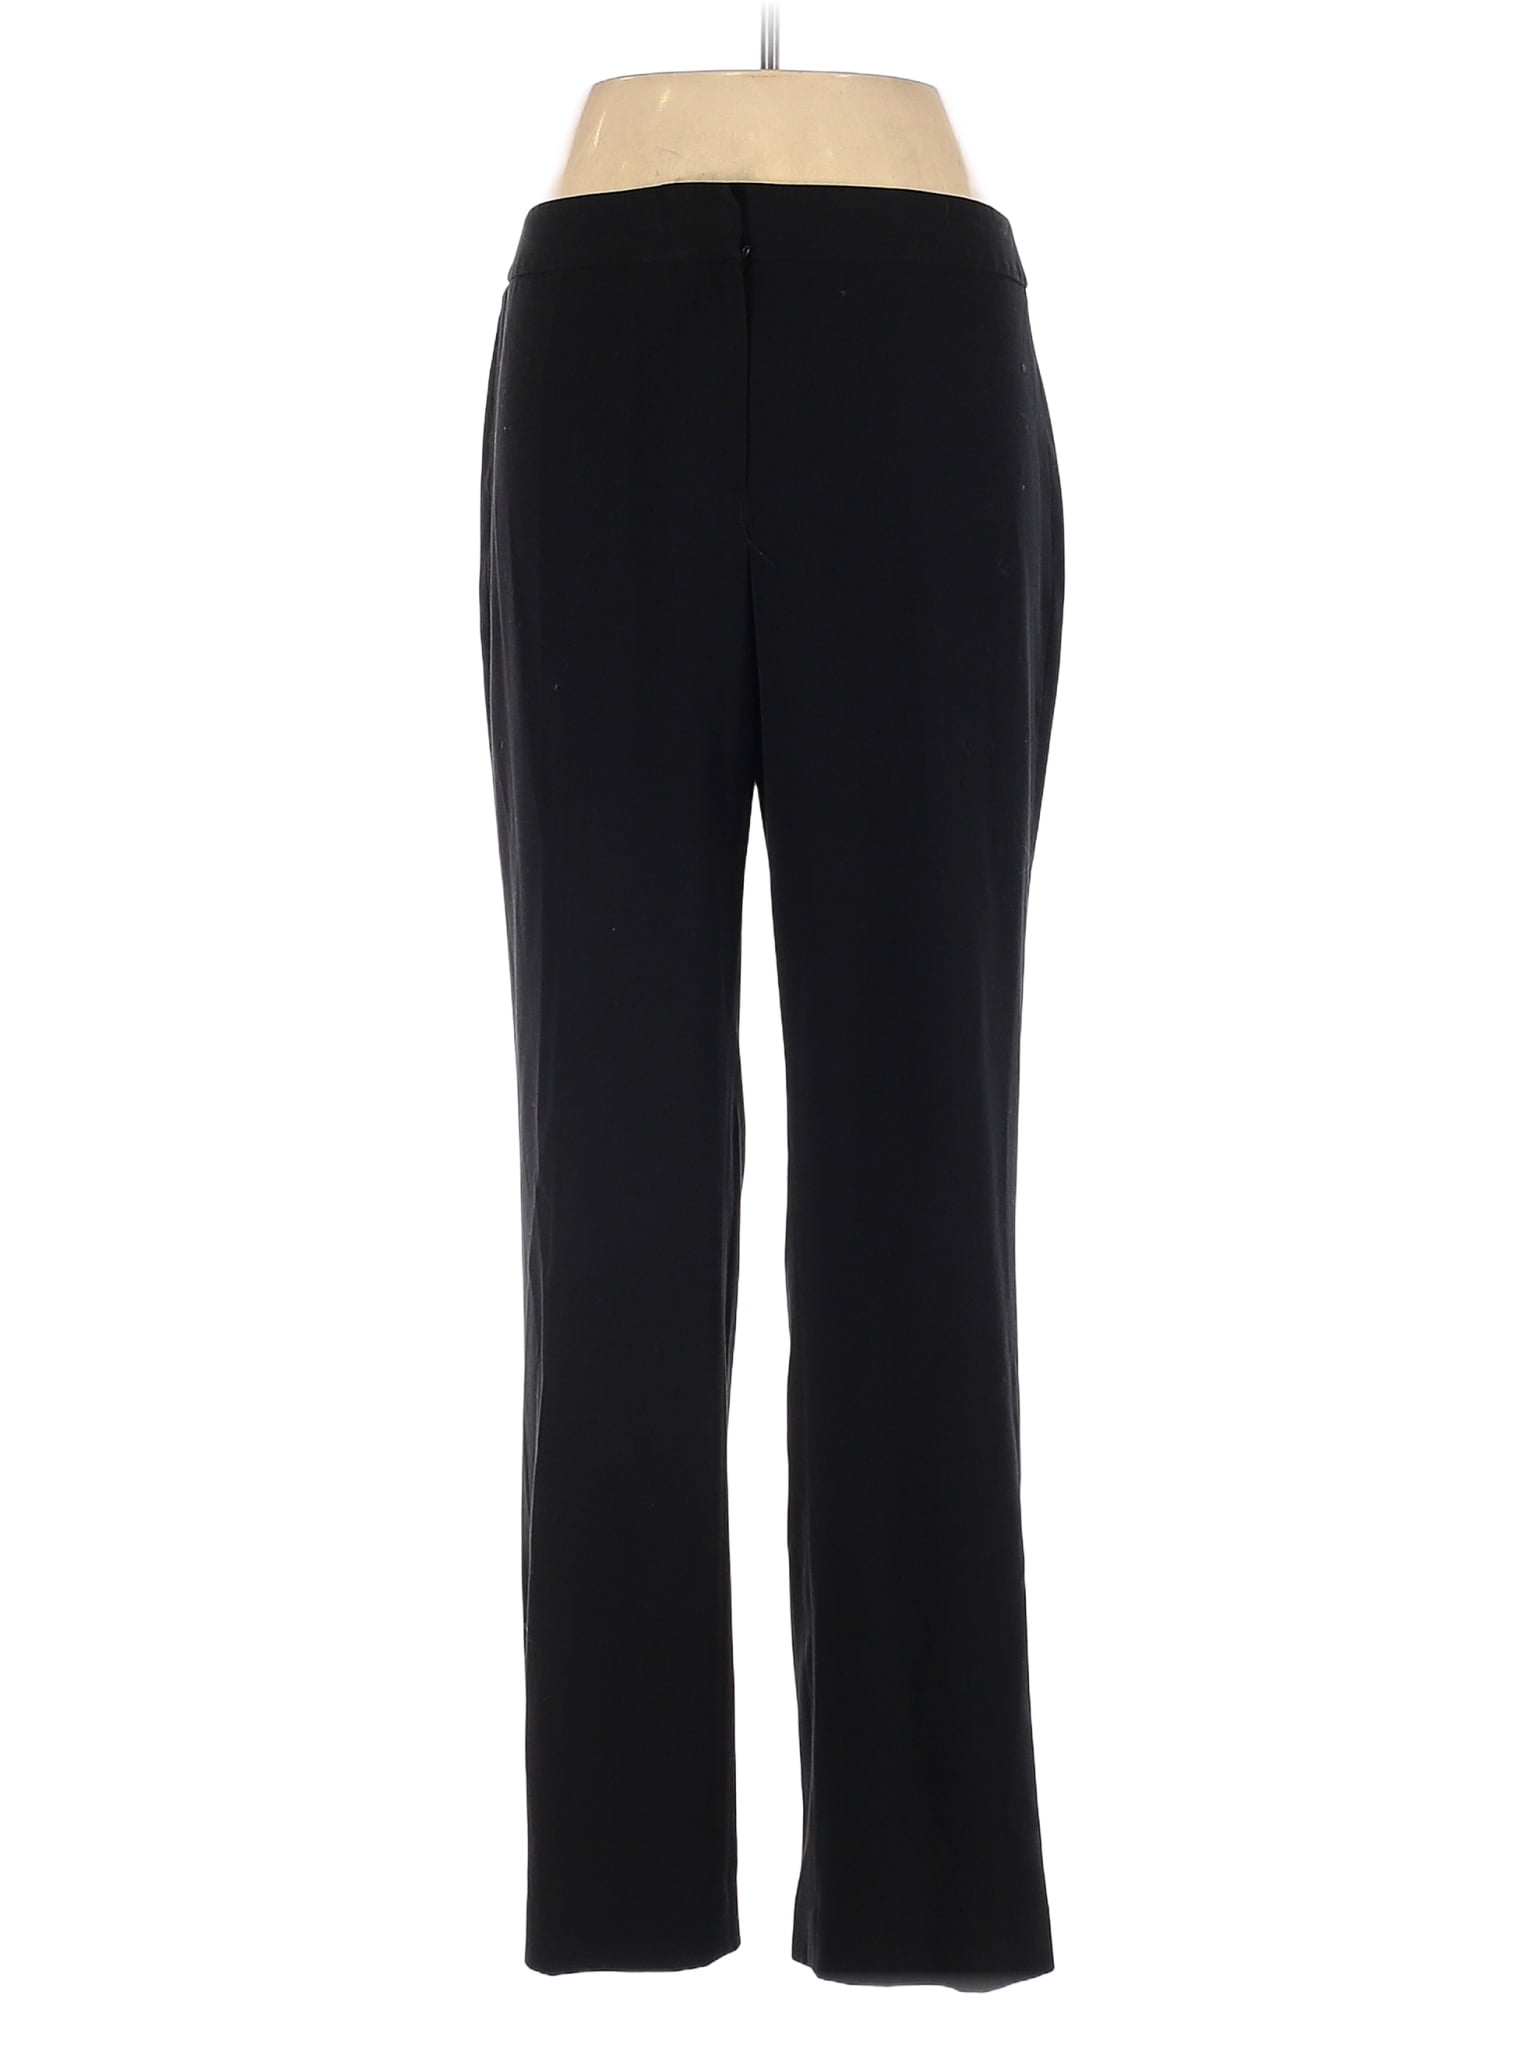 Jones New York Black Dress Pants Size 10 - 88% off | thredUP